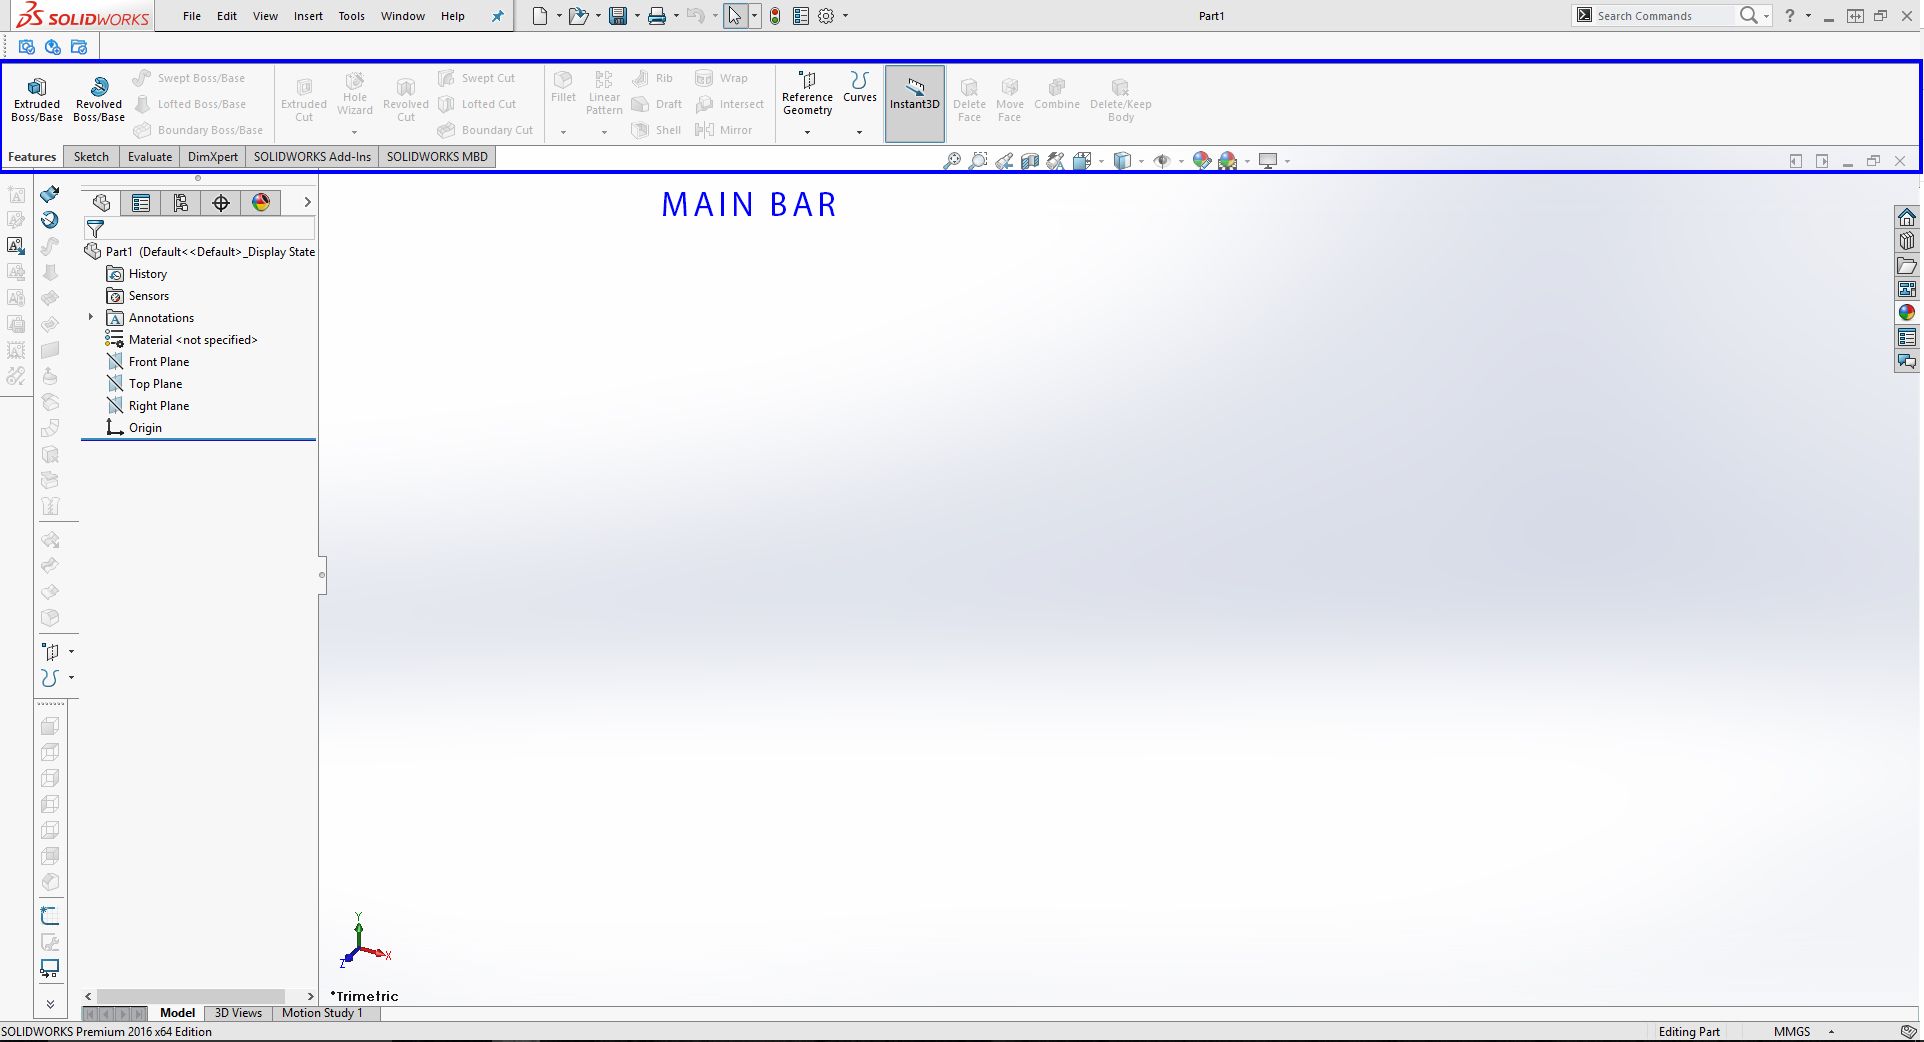 First image Main Bar.jpg